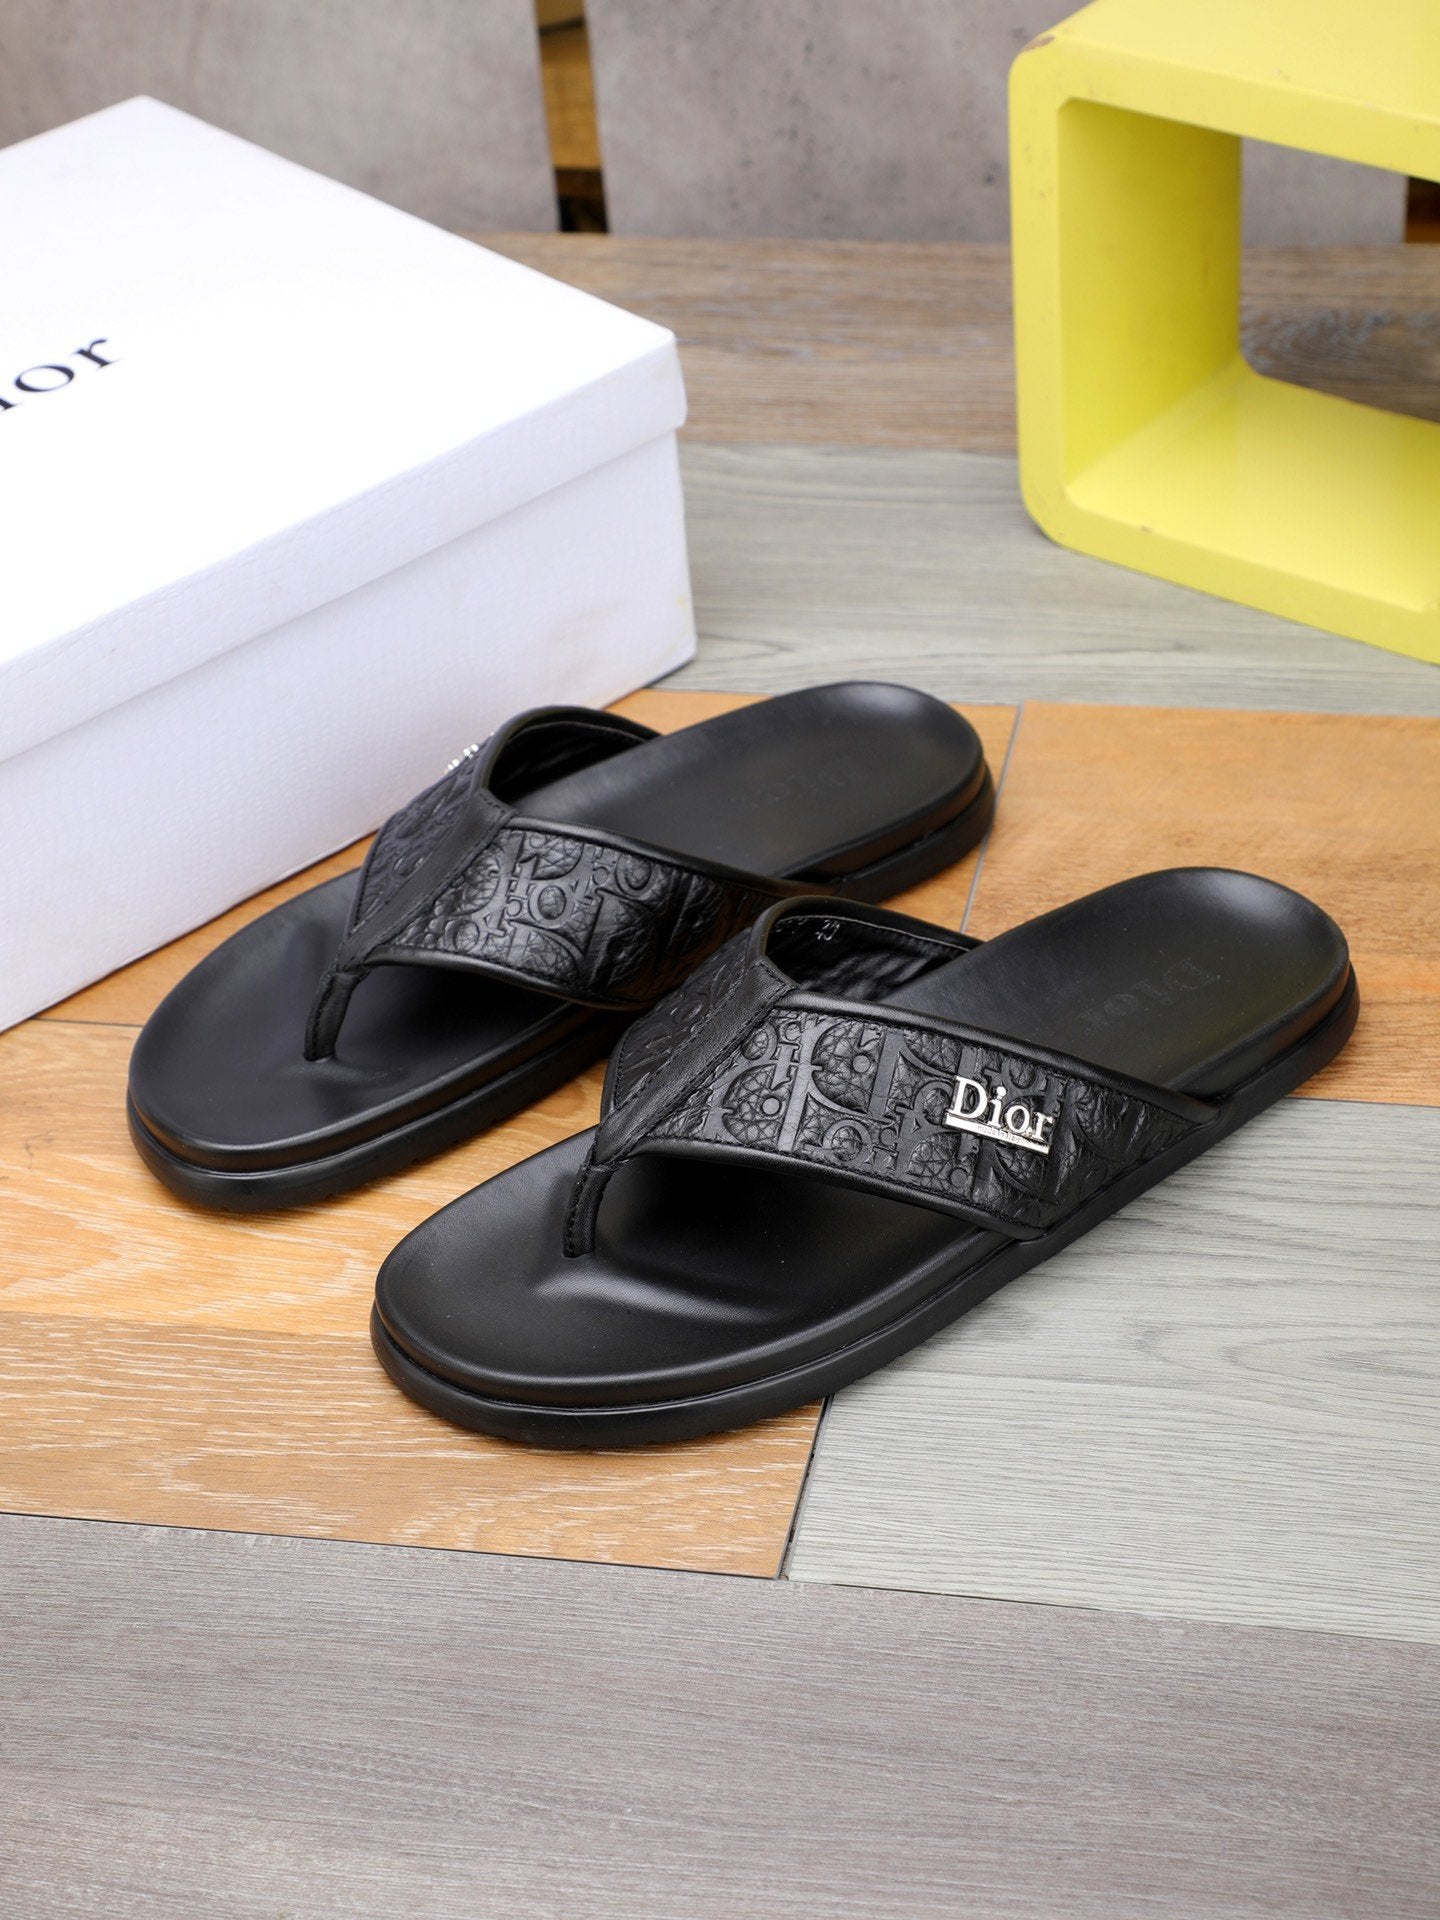 Dior Men's 2021 NEW ARRIVALS Slippers Sandals Shoes